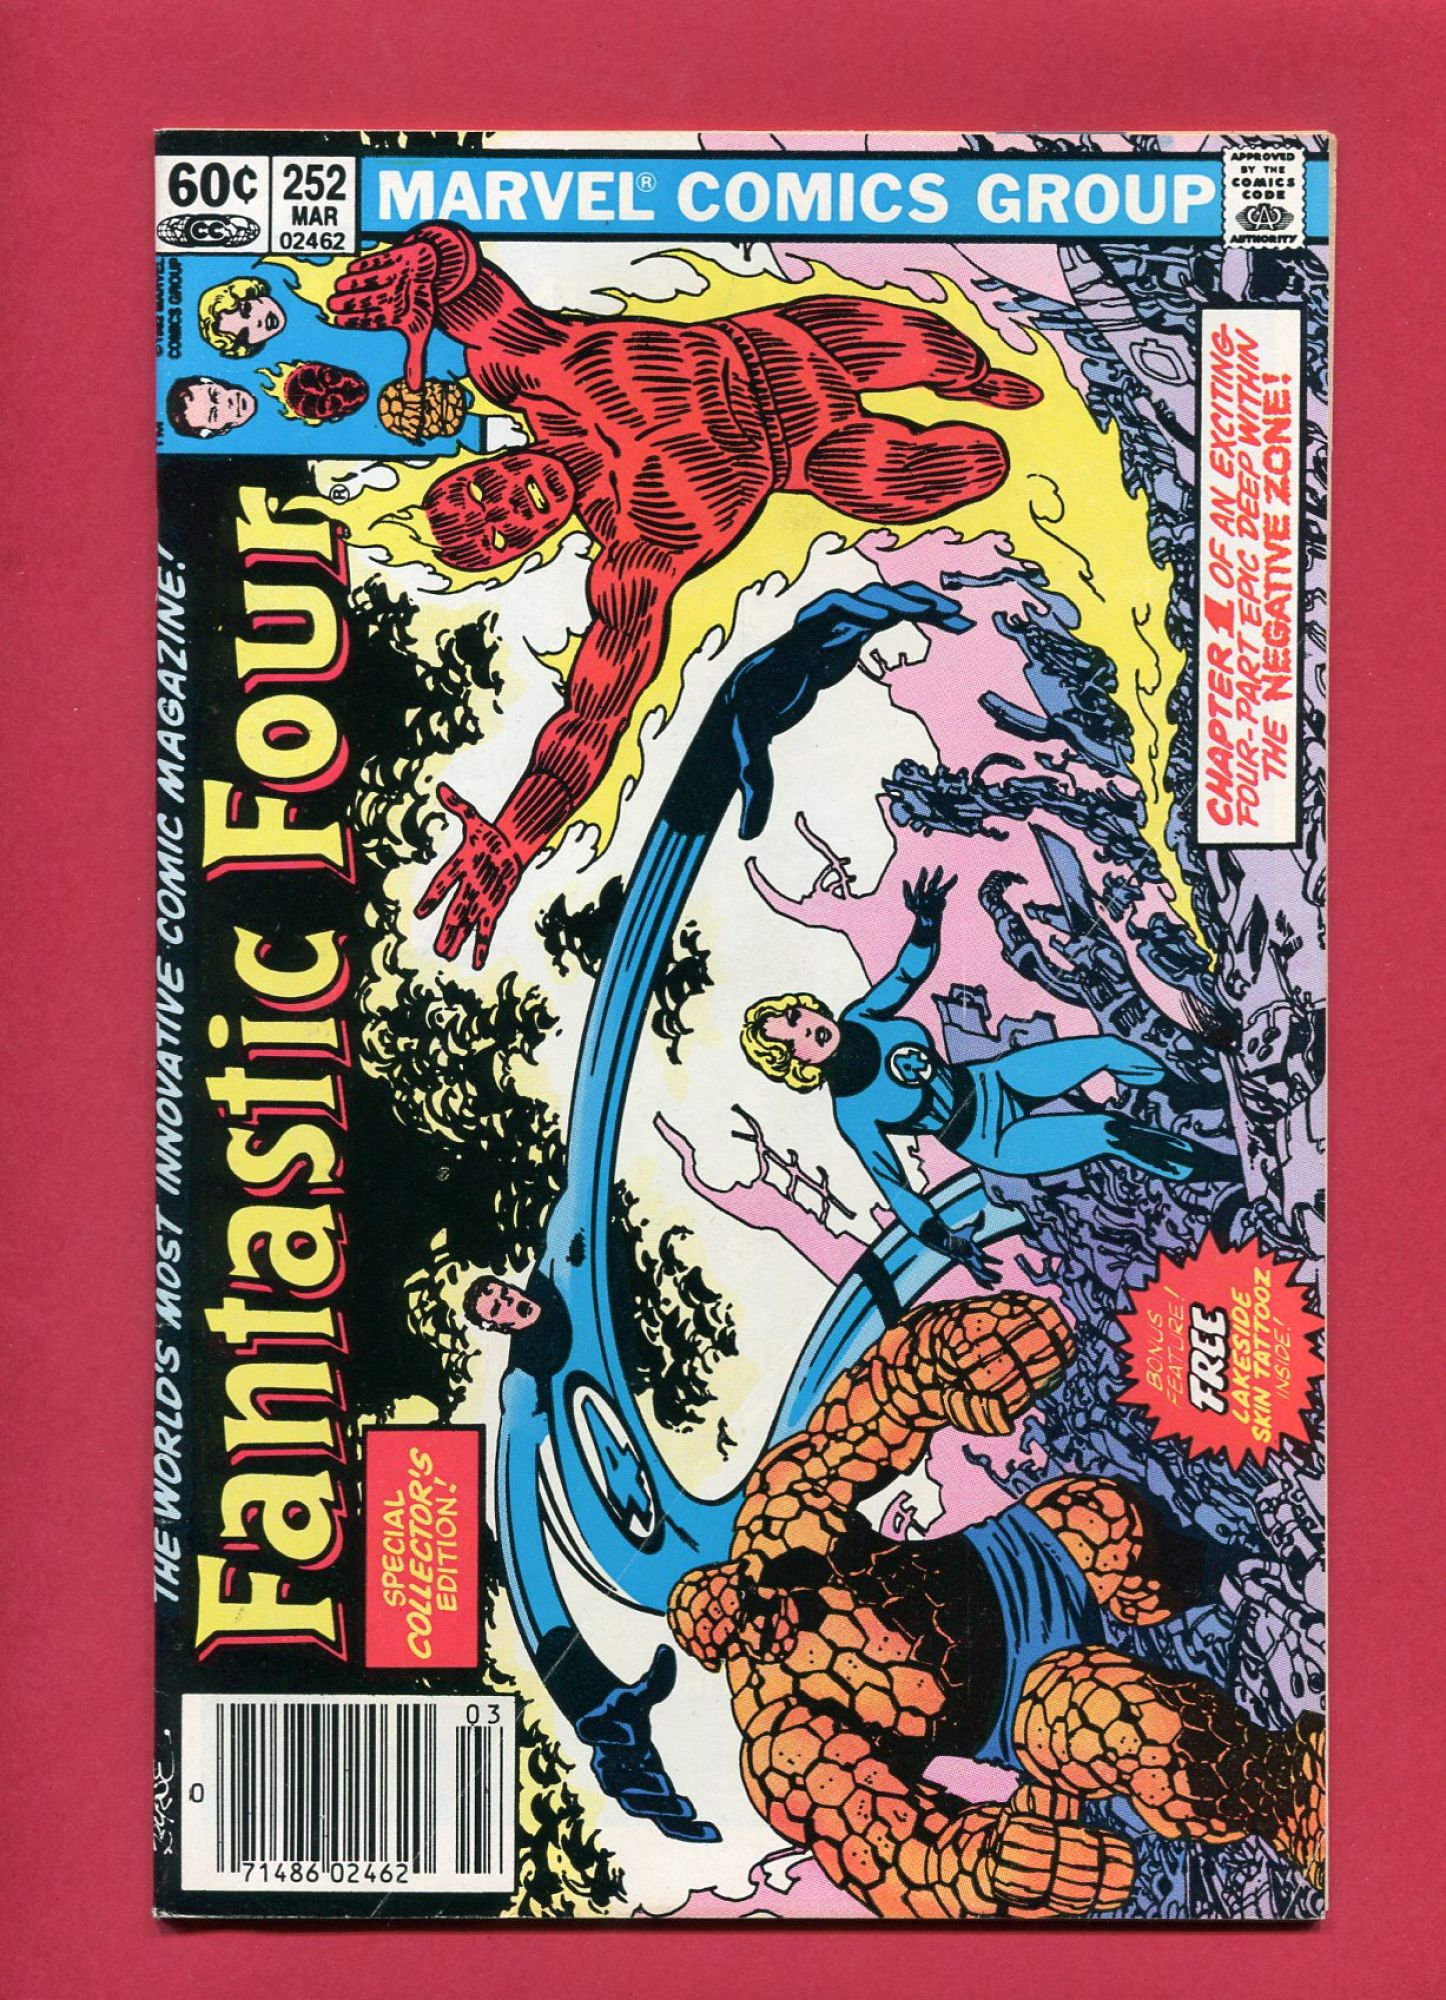 Fantastic Four #252, Mar 1983, 4.5 VG+